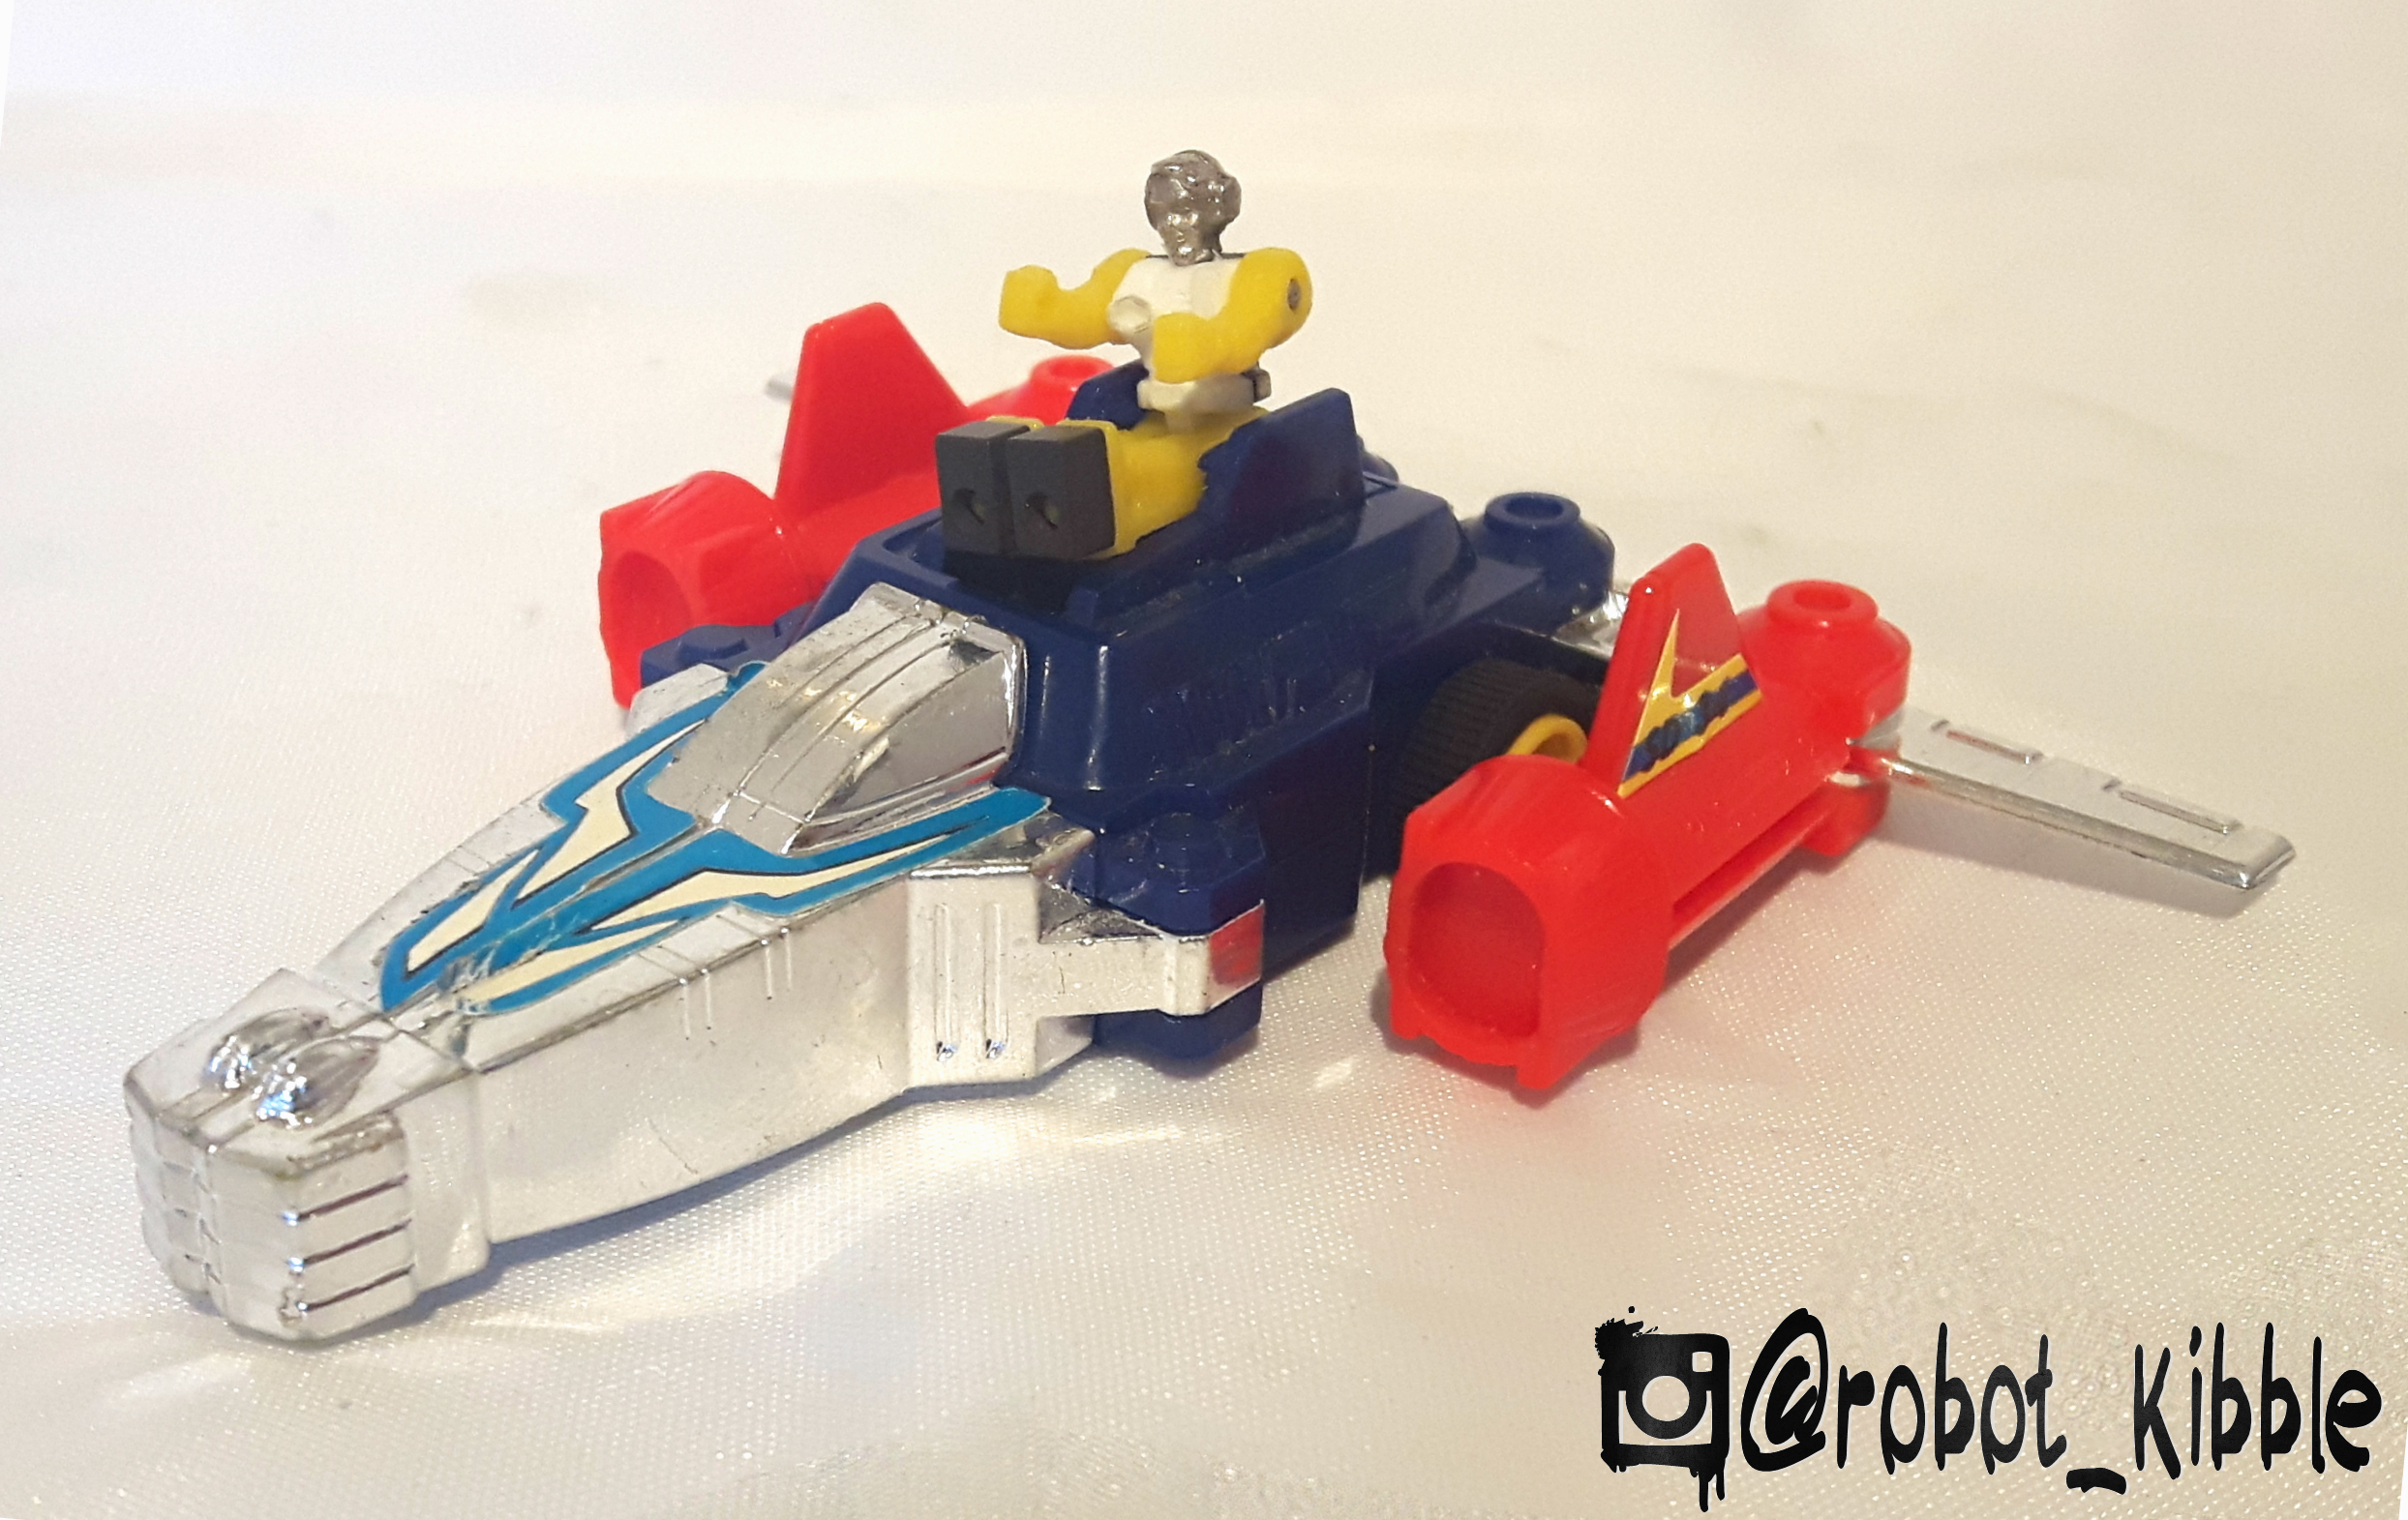 Transformers G1: Powerdasher F1 Dasher and Decoy #12 Skids